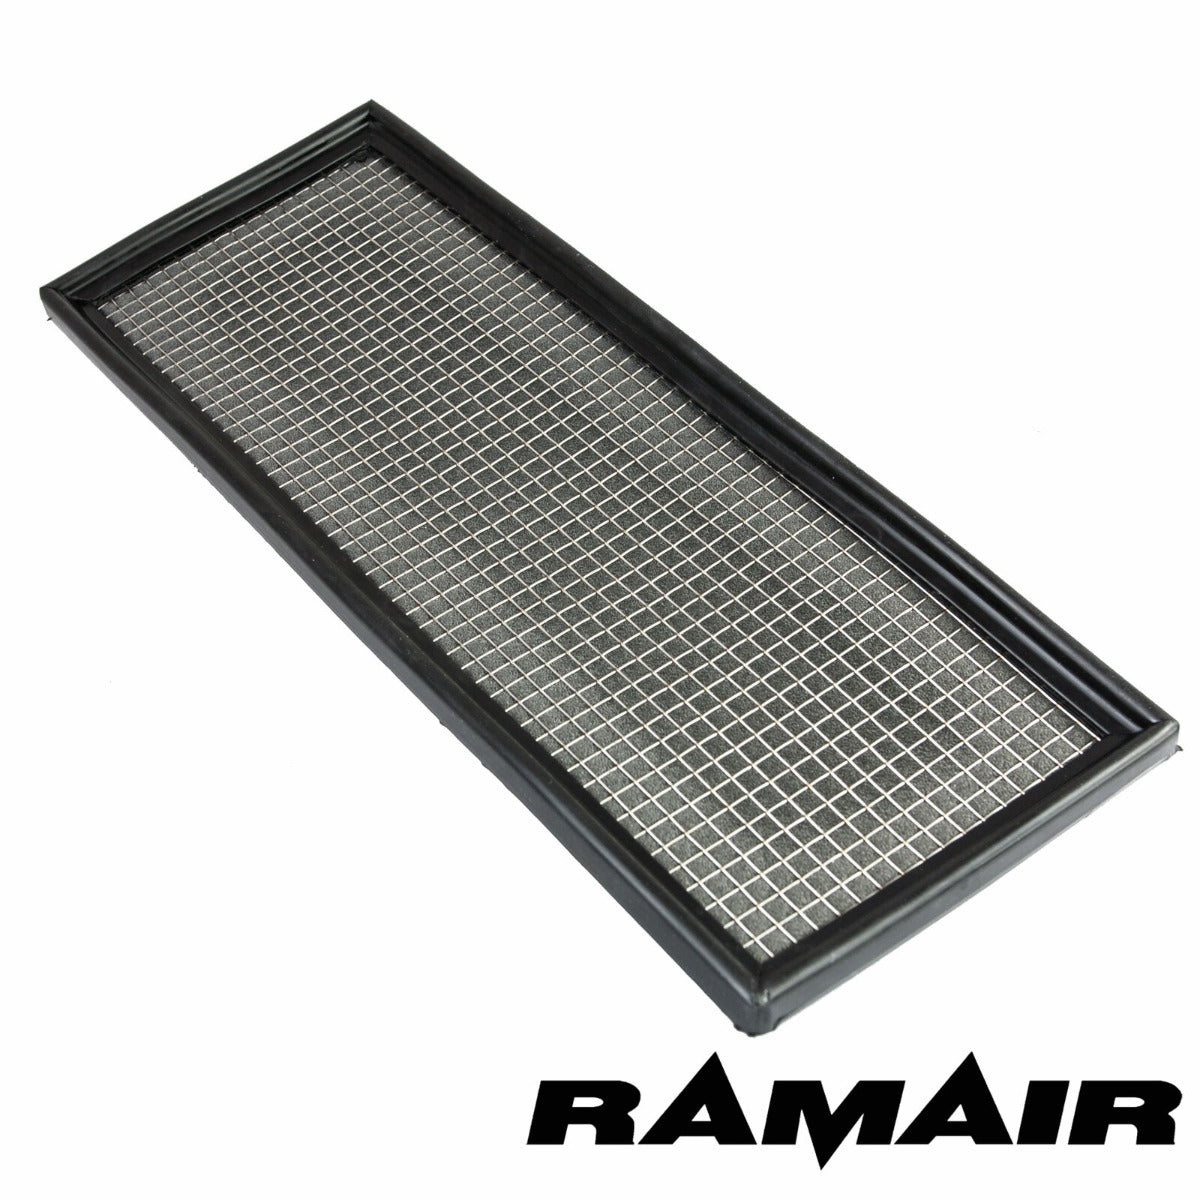 Ramair Air Filter for Mercedes-Benz S-Class S280 S320 S350 S430 S500 W220 (98-02)